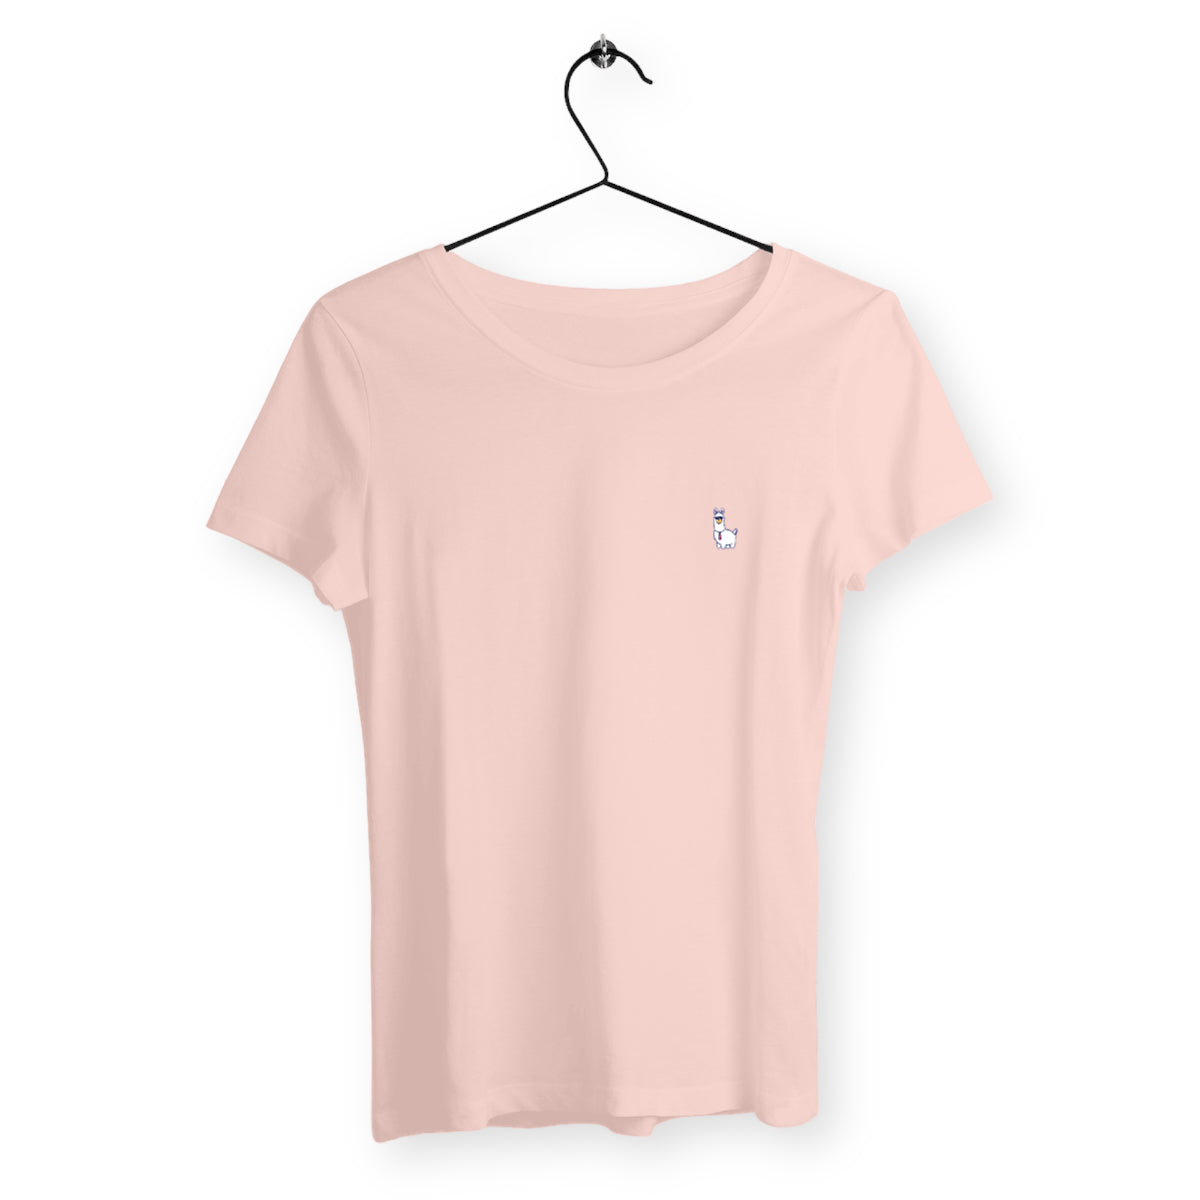 T-shirt femme canaillage color